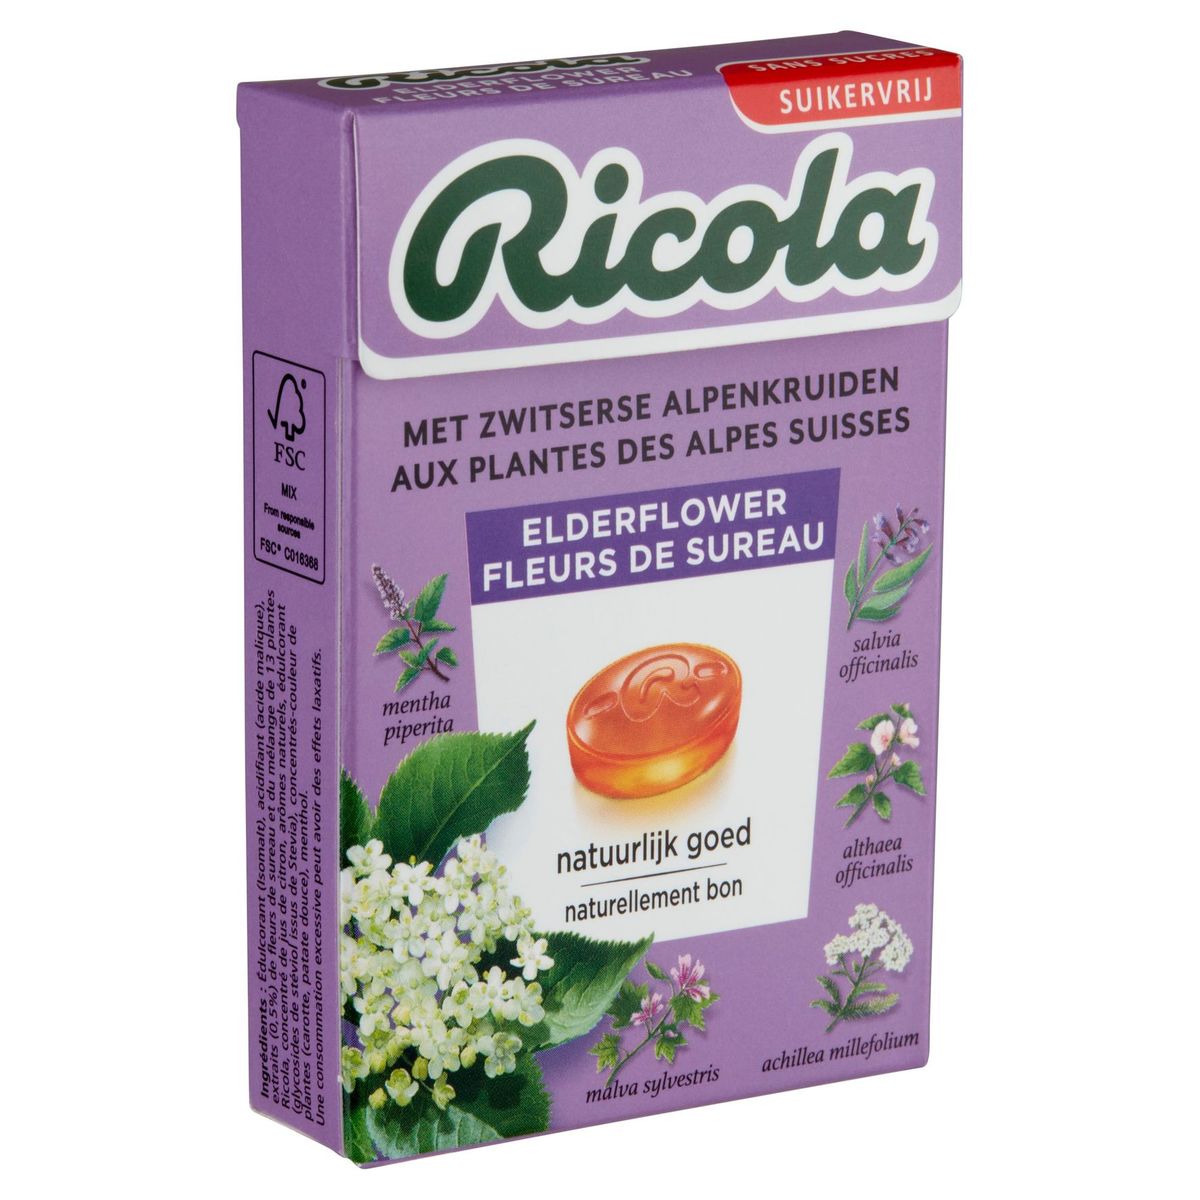 Ricola Elderflower met Zwitserse Alpenkruiden 50 g